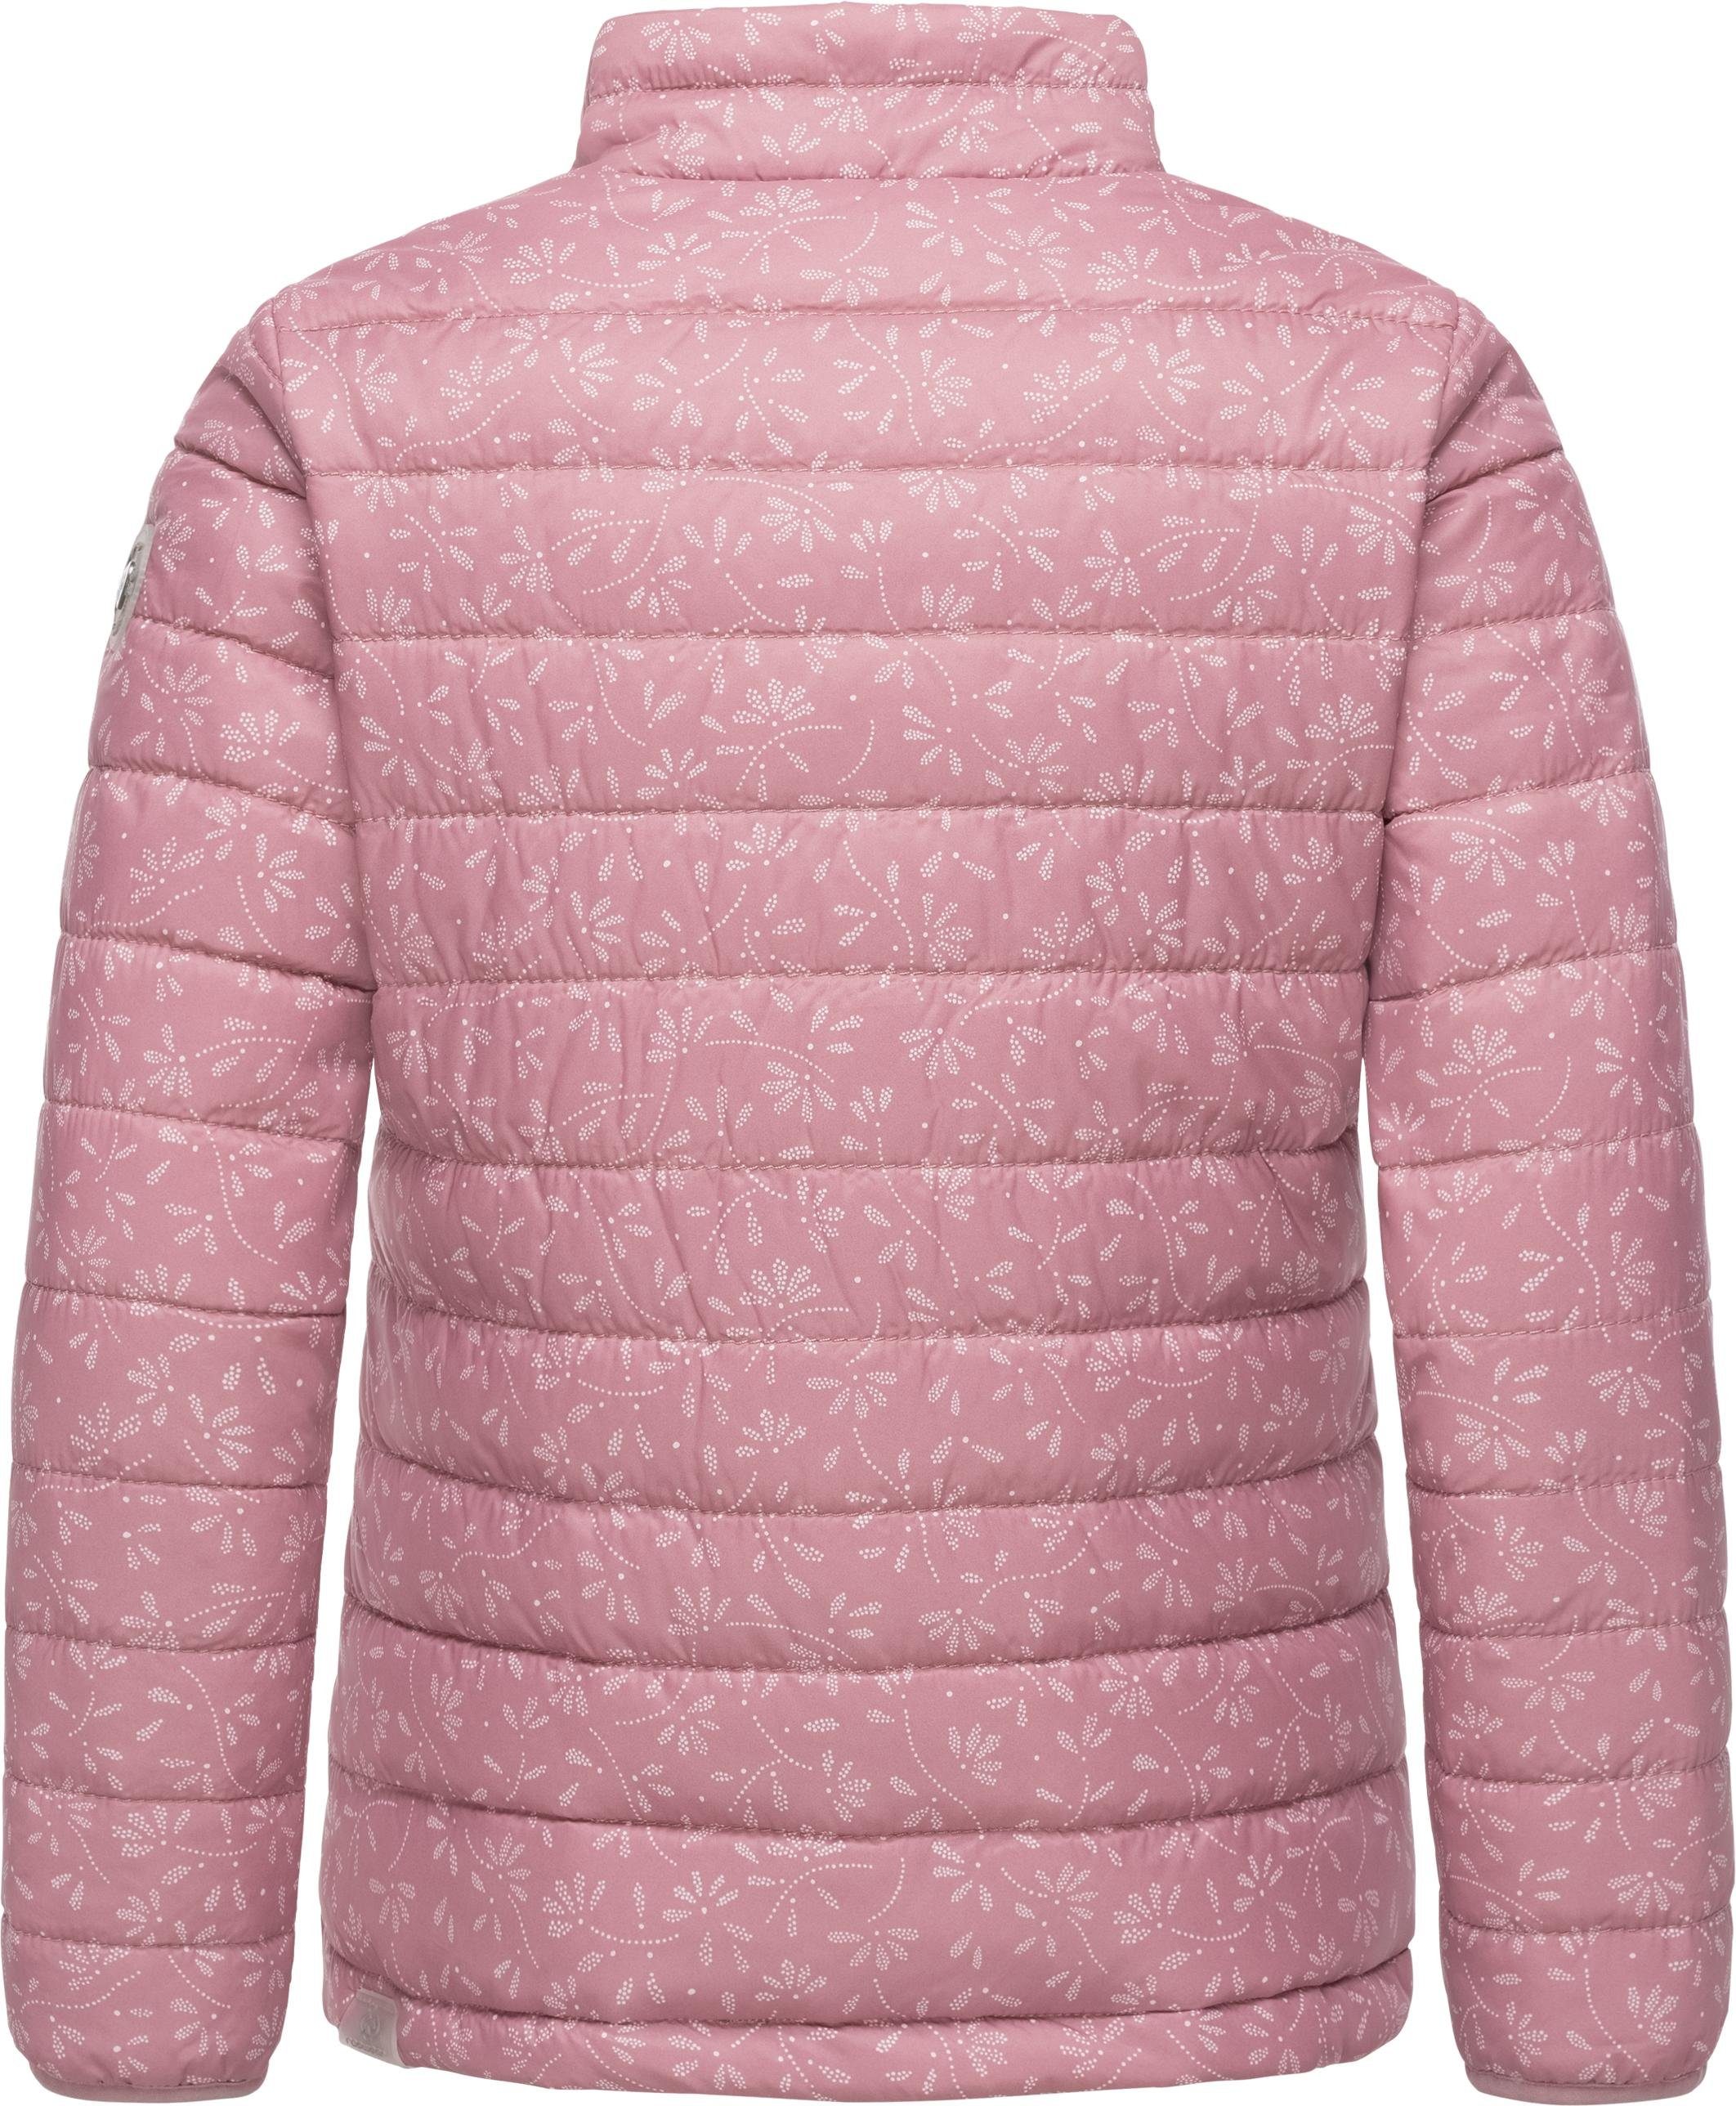 Ragwear Steppjacke Yarca mit Mädchen rosa Bloom Blumen-Print Jacke coolem Gesteppte